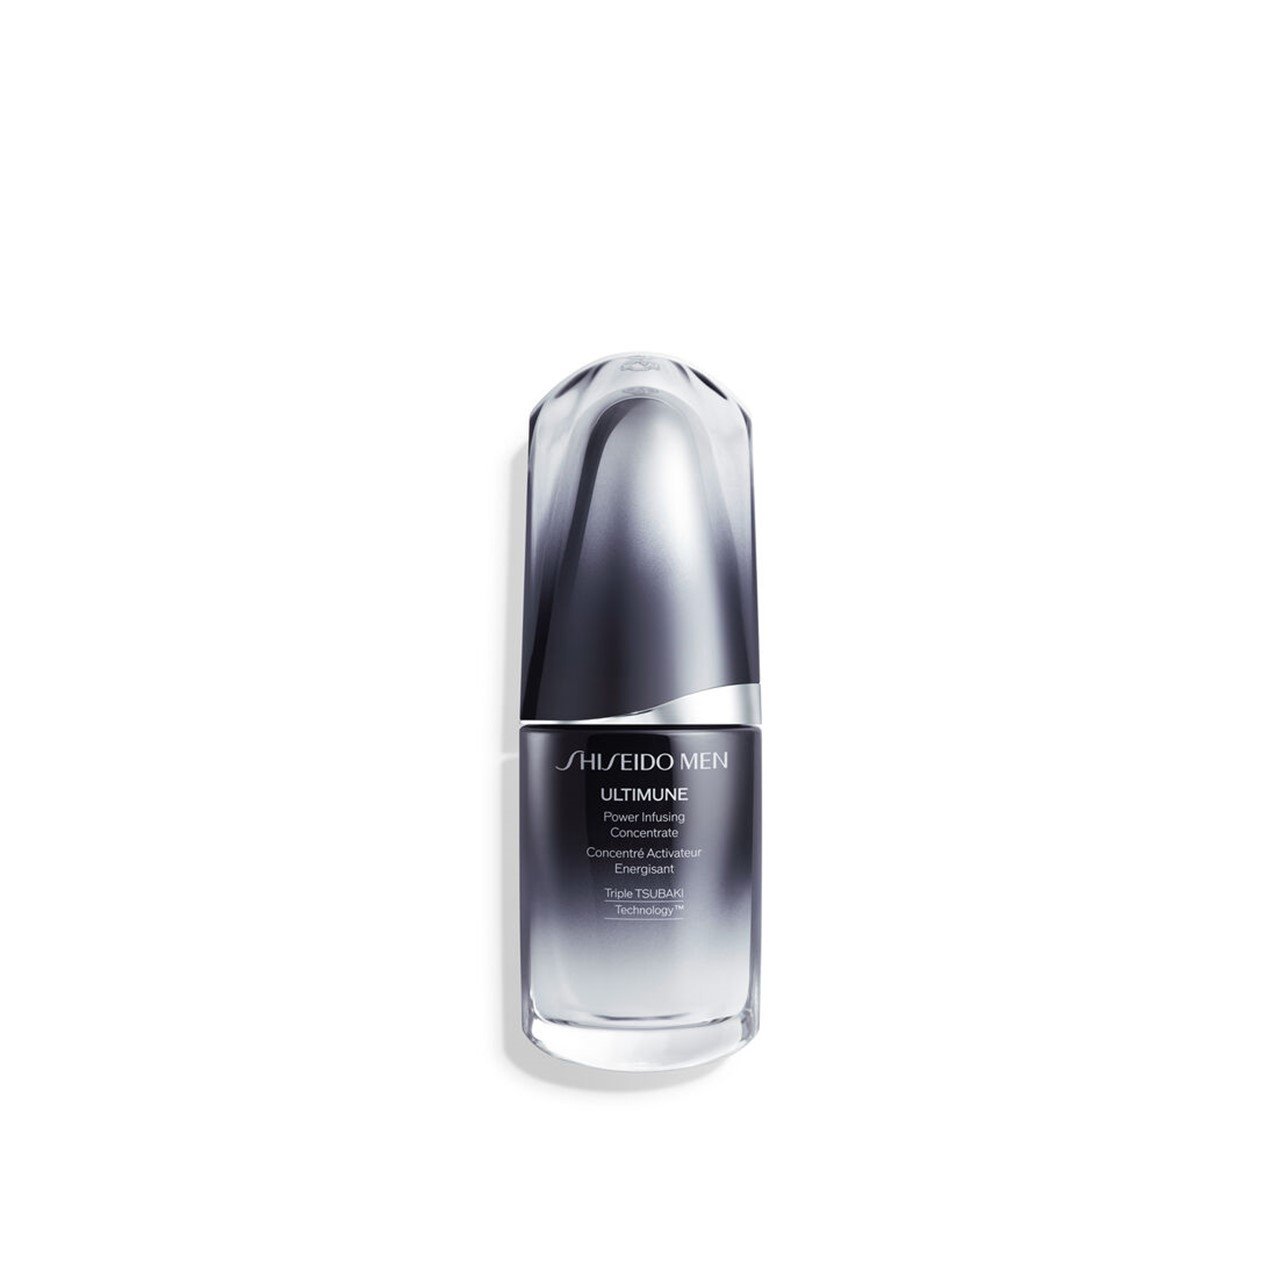 Shiseido Men Ultimune Power Infusing Concentrate Serum 30ml (1.01fl oz)